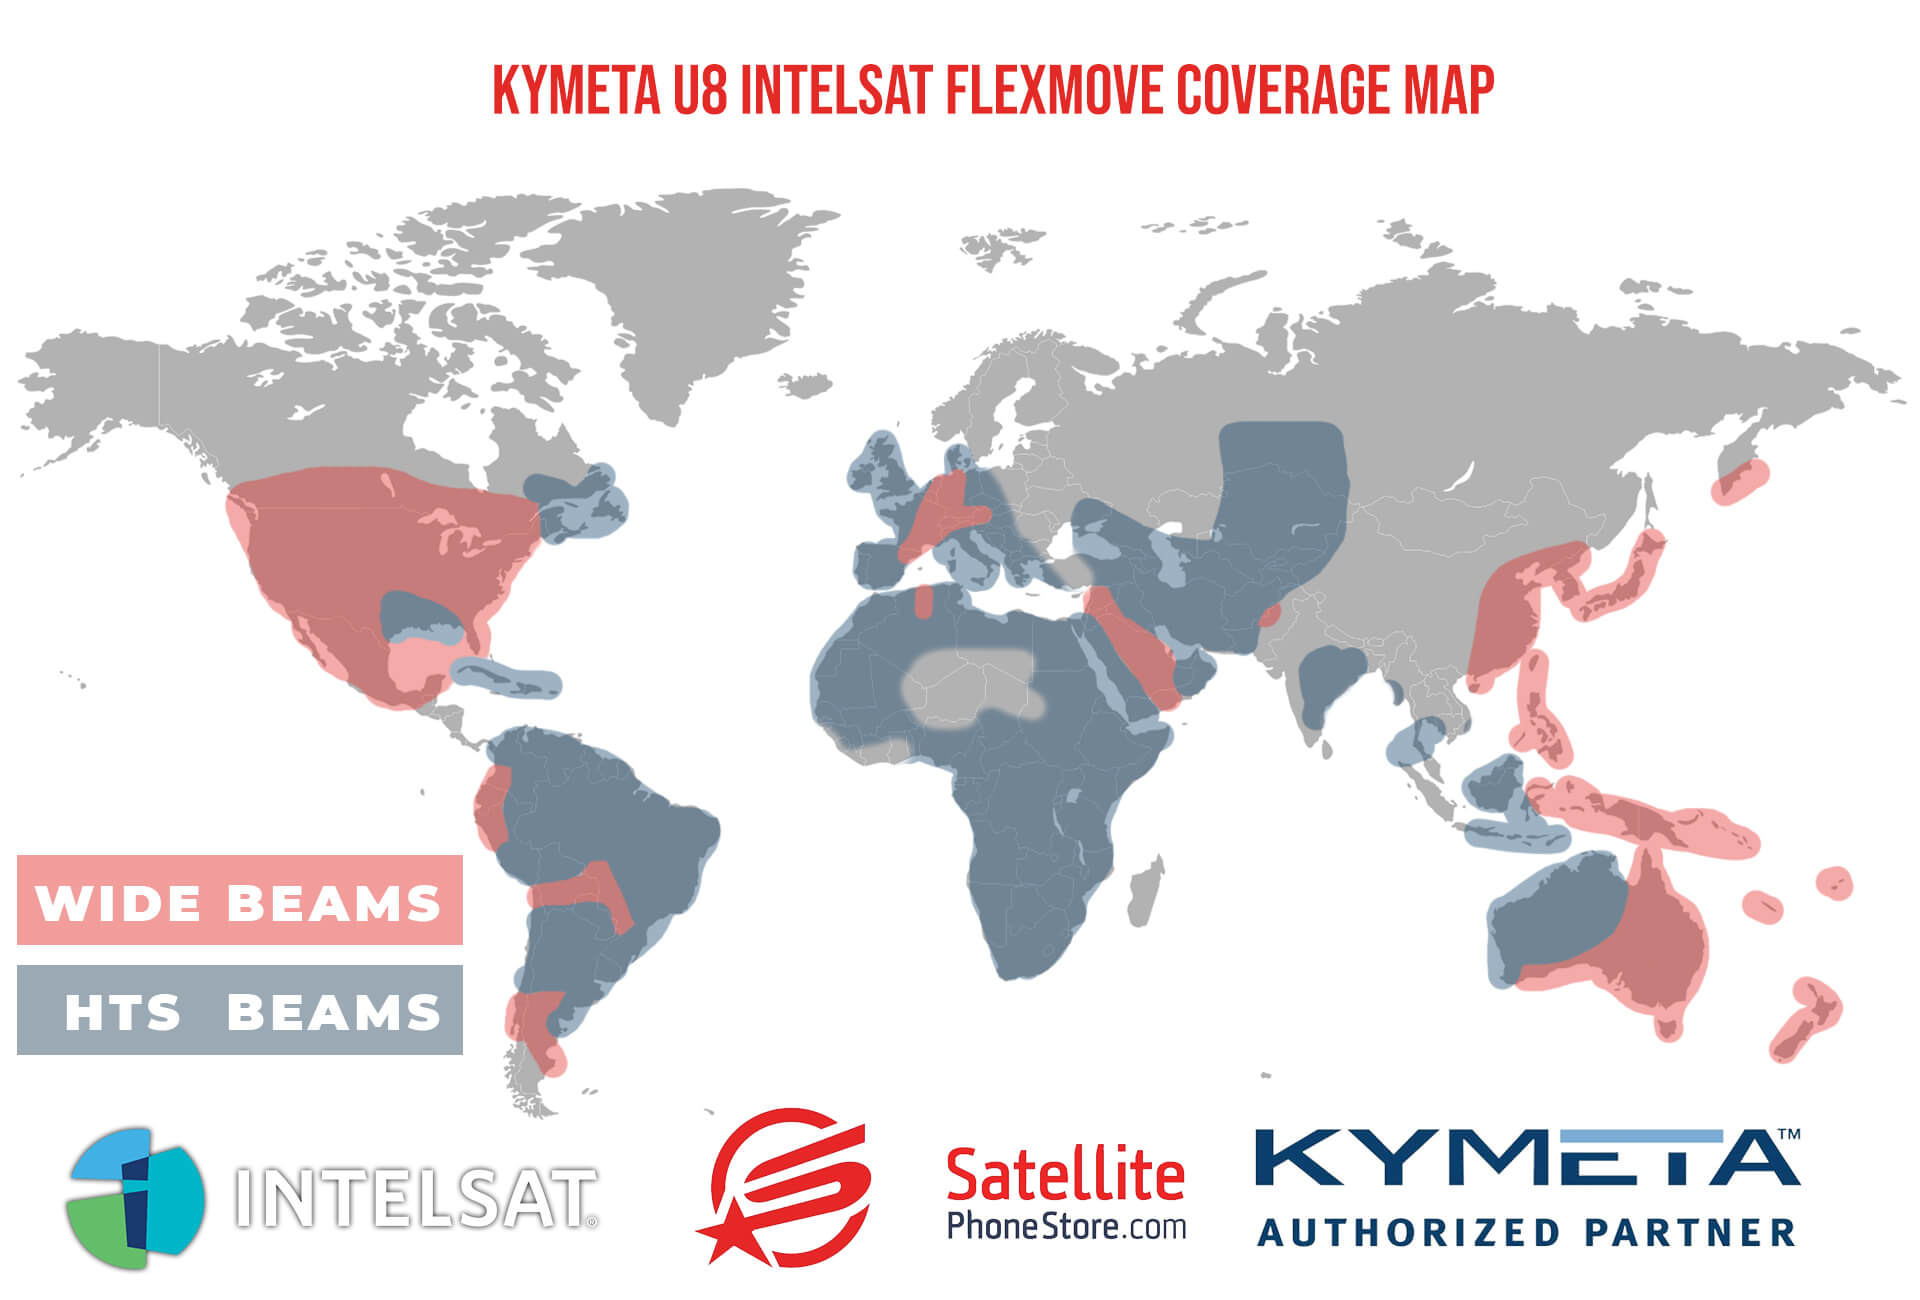 Kymeta U8 Intelsat Flexmove Coverage Map